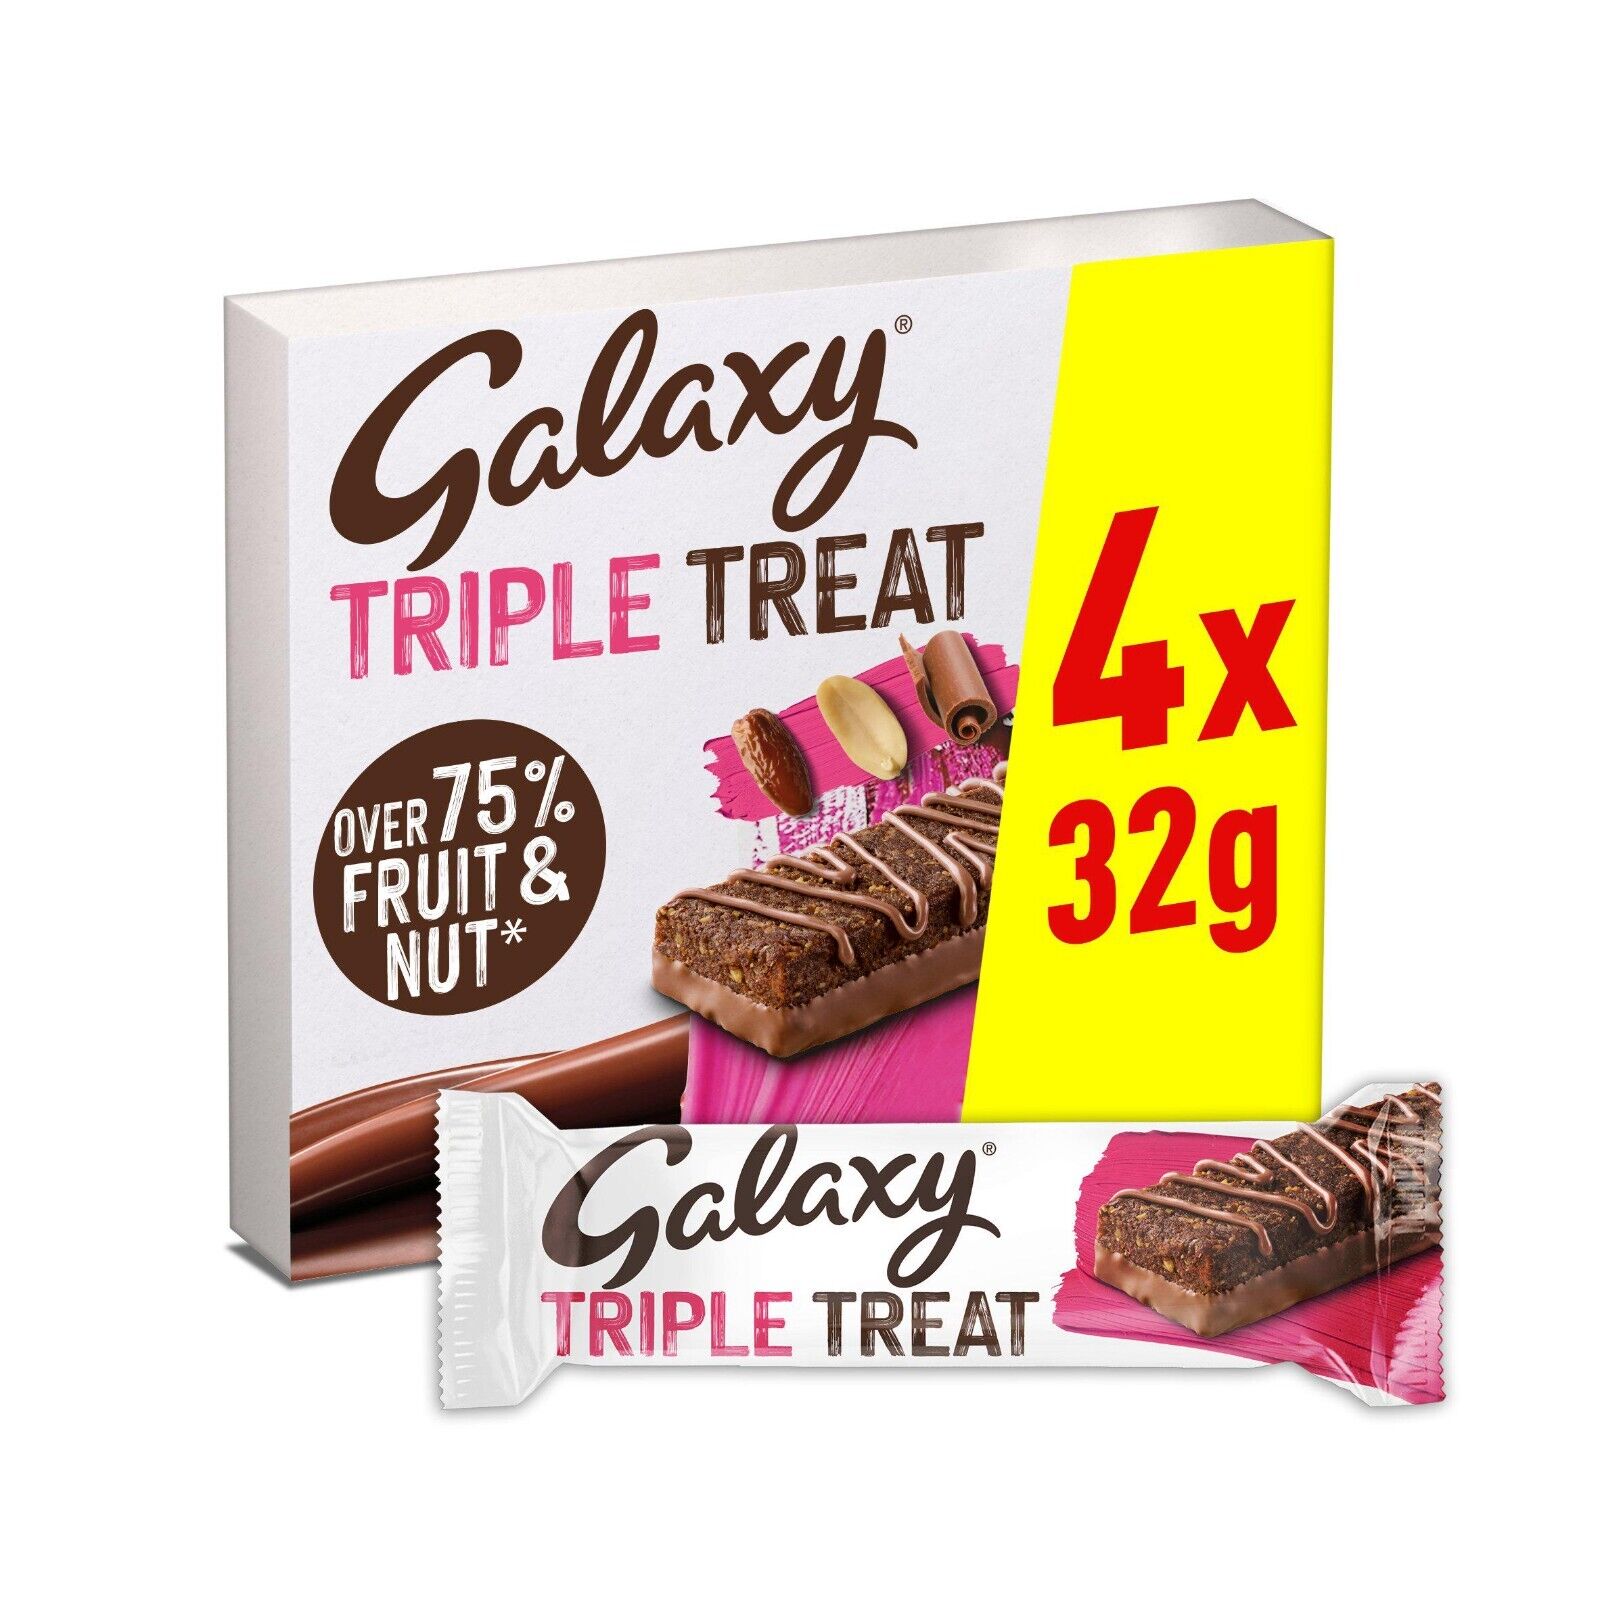 Galaxy Triple Treat Bar  4 Pack (UK)